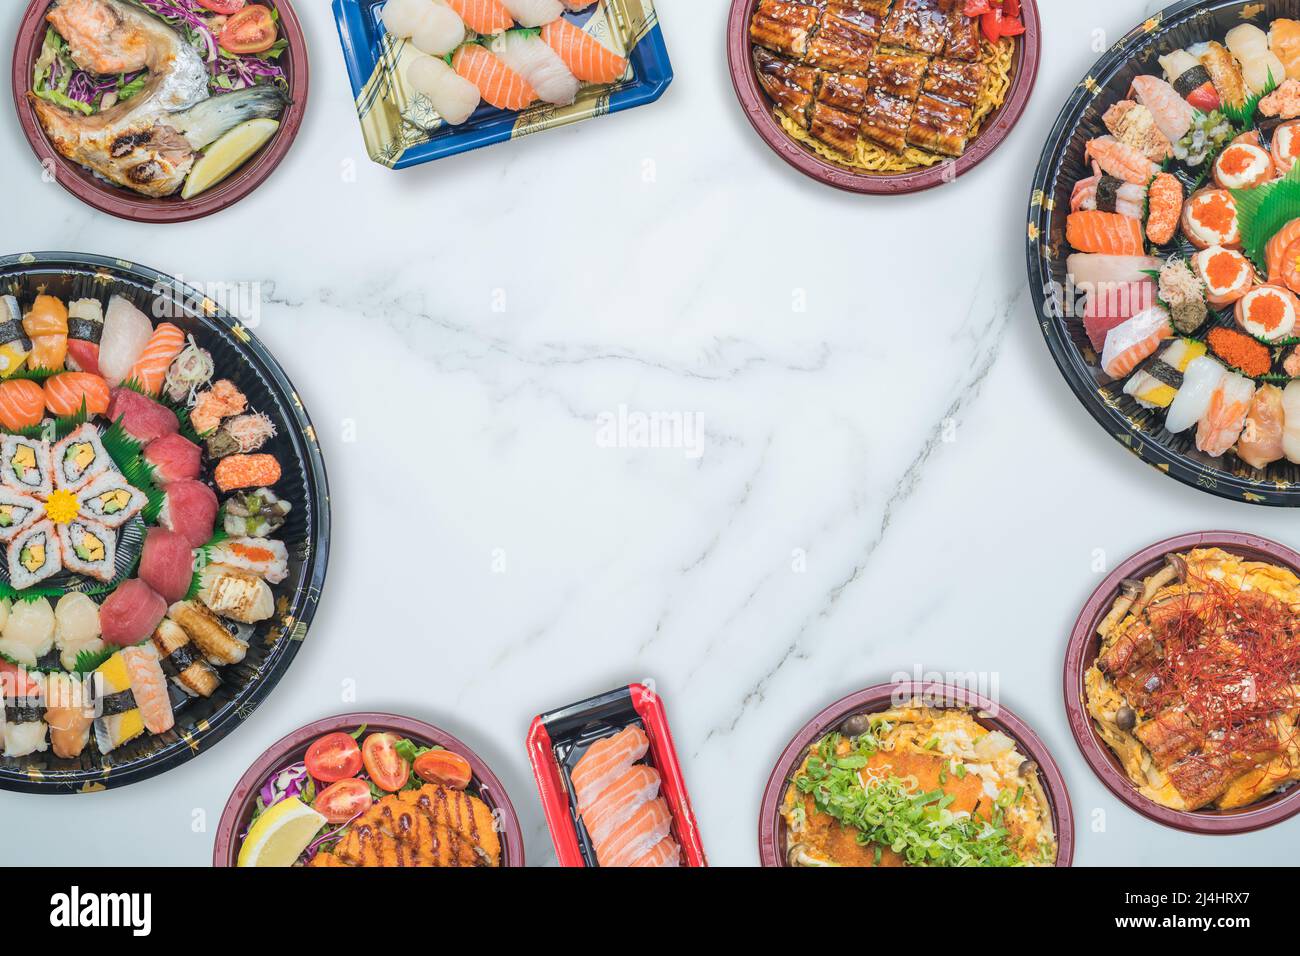 https://c8.alamy.com/comp/2J4HRX7/takeaway-boxed-sushi-gathering-party-with-japanese-food-platter-birds-eye-view-shooting-food-stock-photo-2J4HRX7.jpg